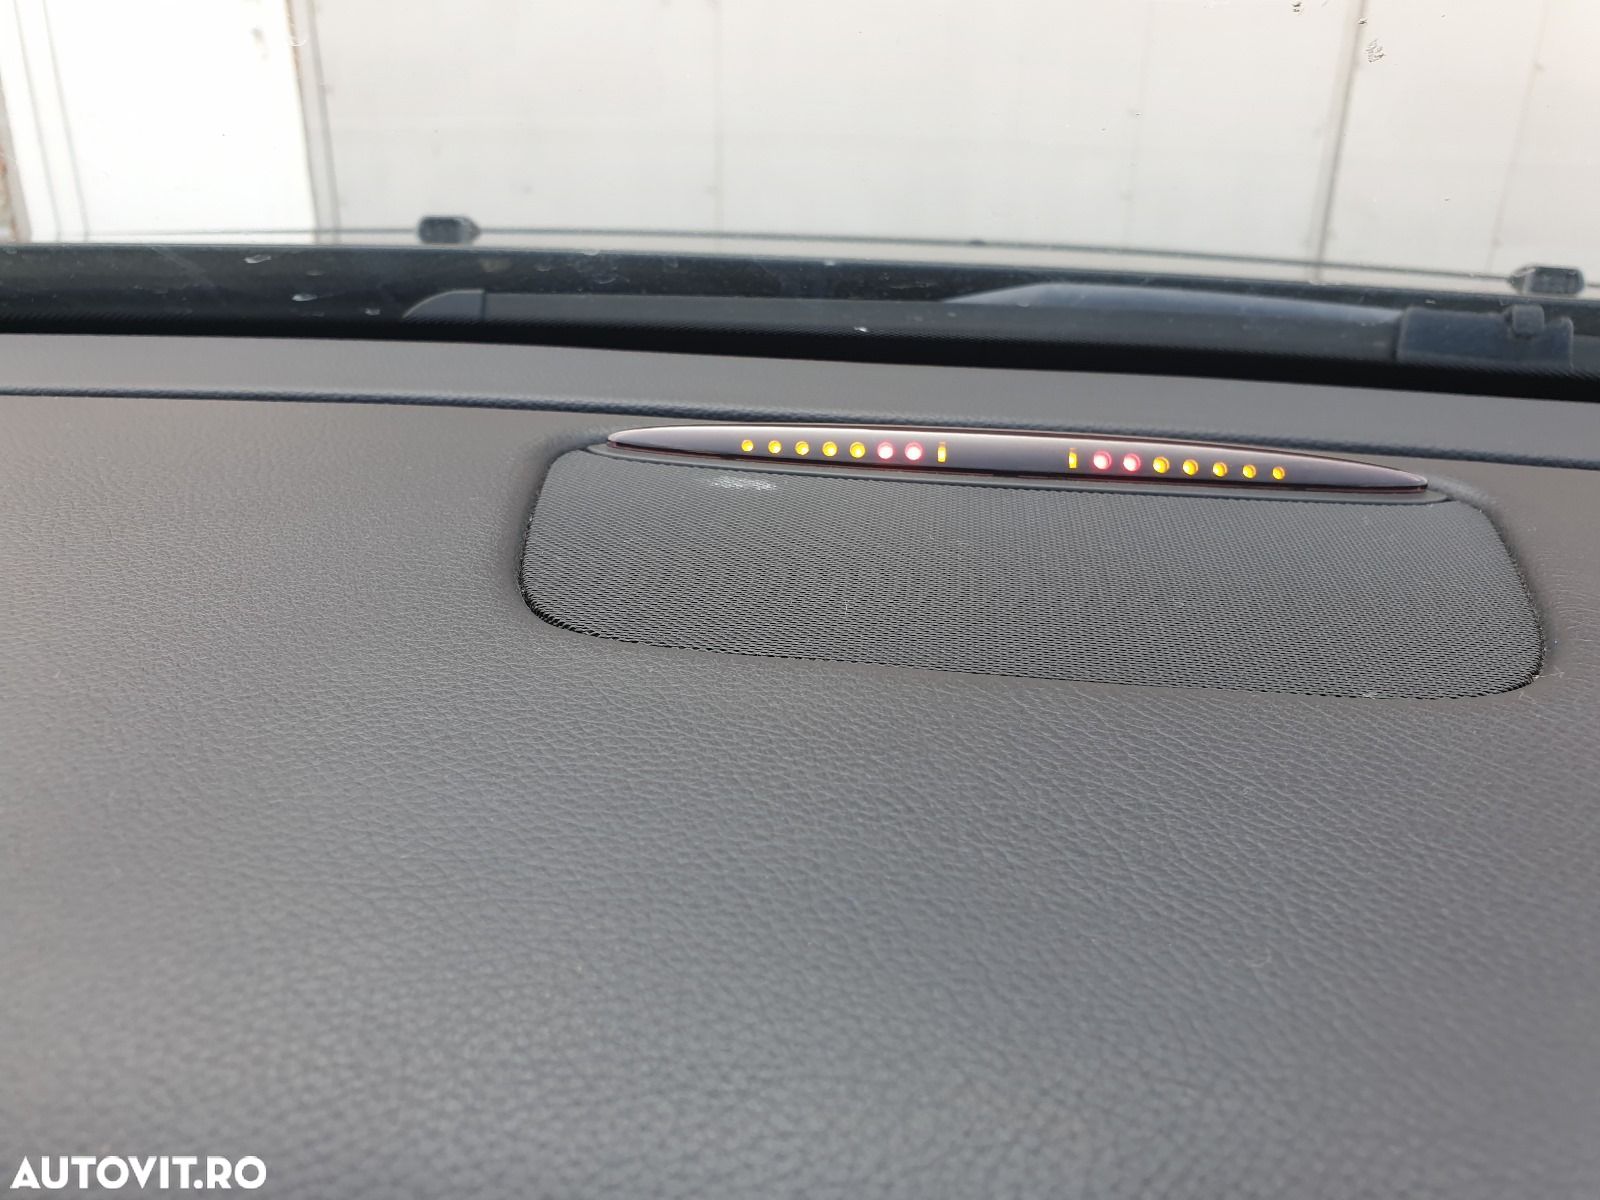 Afisaj Ecran Indicator Senzori Parcare Fata Bord Mercedes CLS C219 W219 Facelift 2004 - 2010 [C0214] - 1